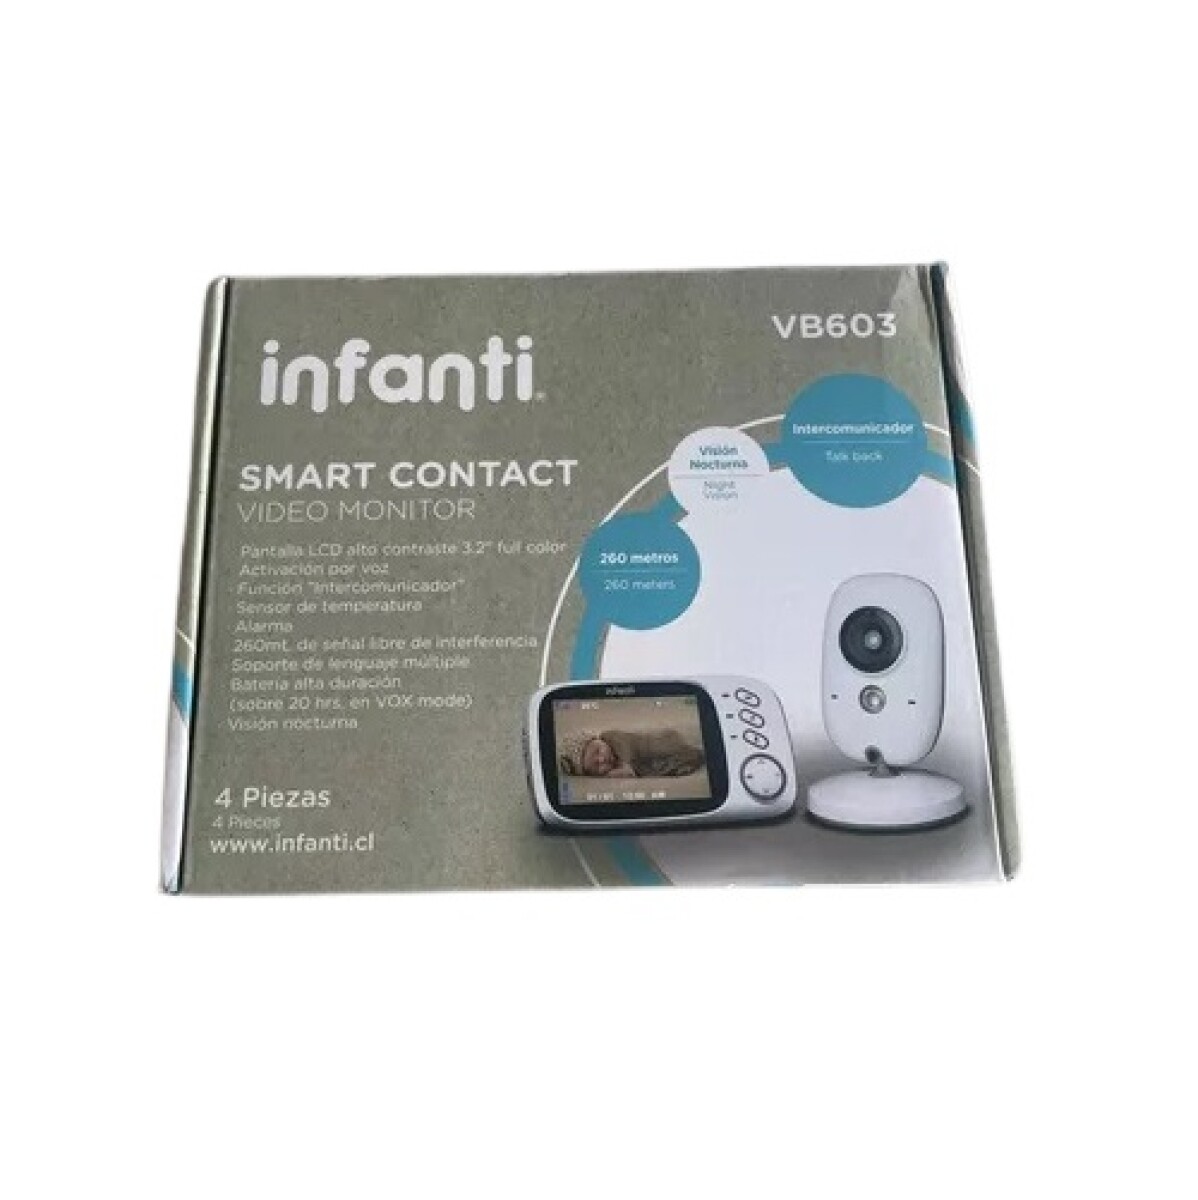 Video Monitor Infanti Vb603 